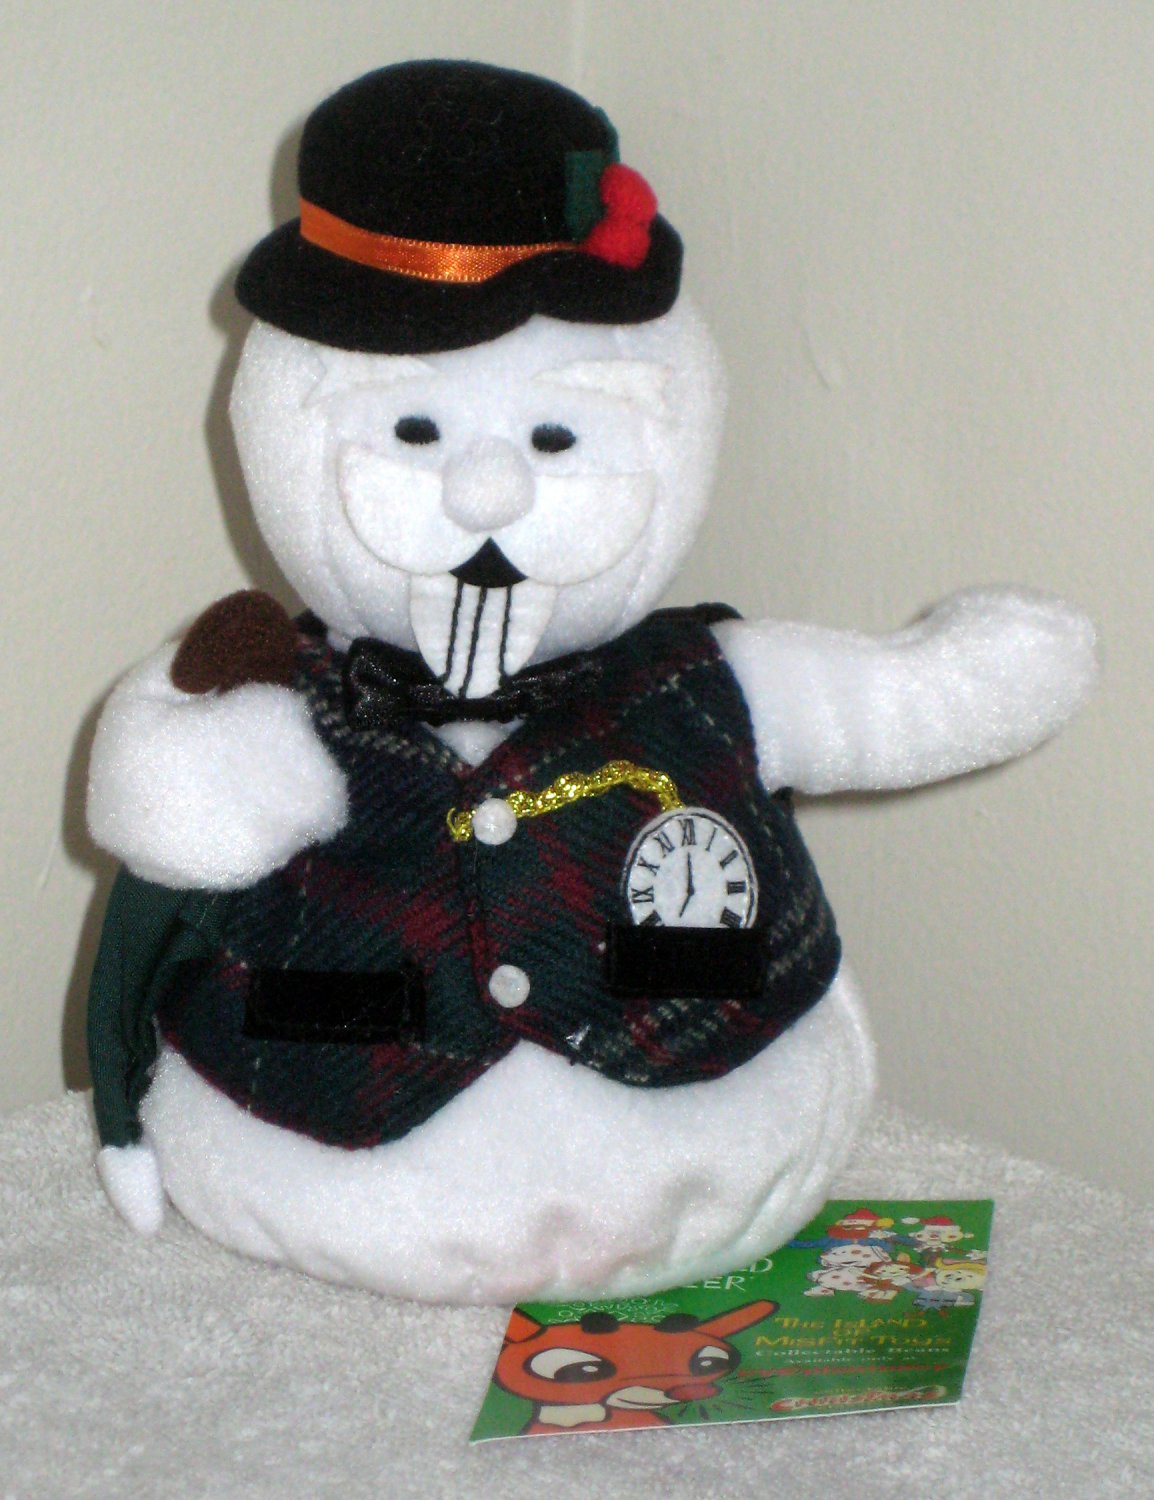 Sam the Snowman 6-7 Inch Plush Bean Bag Rudolph Island Misfit Toys Stuffins  1999 NWT Stuffed Toy